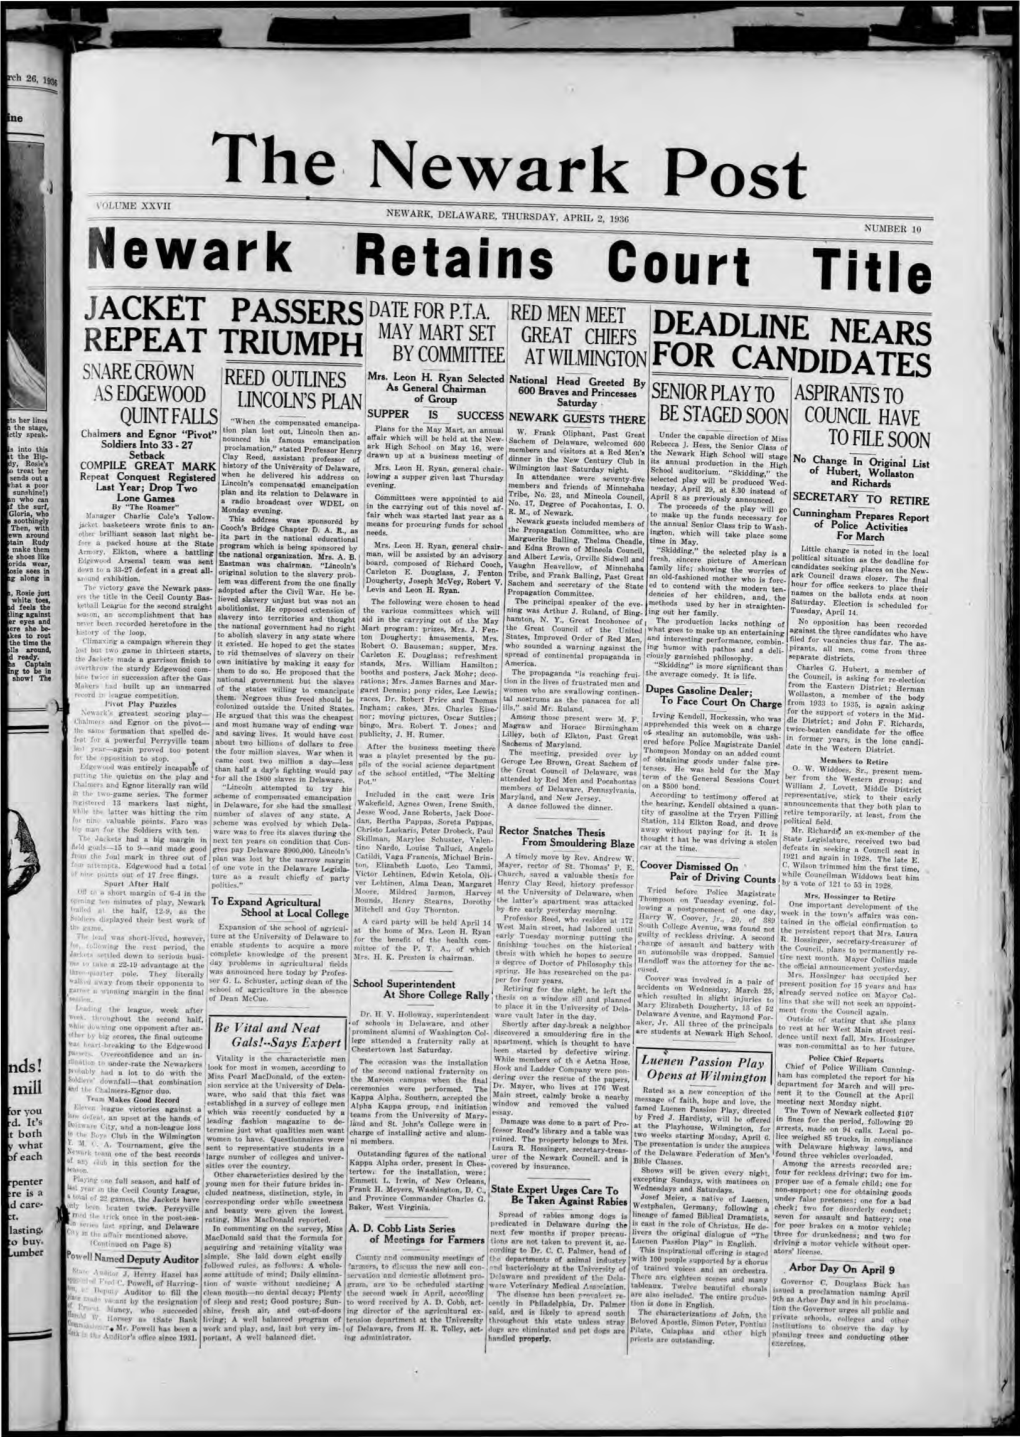 The· Newark Post ' "OLUME XXVII NEWARK, DELA WARE, THURSDAY, APRIL 2, 1936 NUMBER 10 Ewark Retains Court Title ASSERS'date for P.T.A